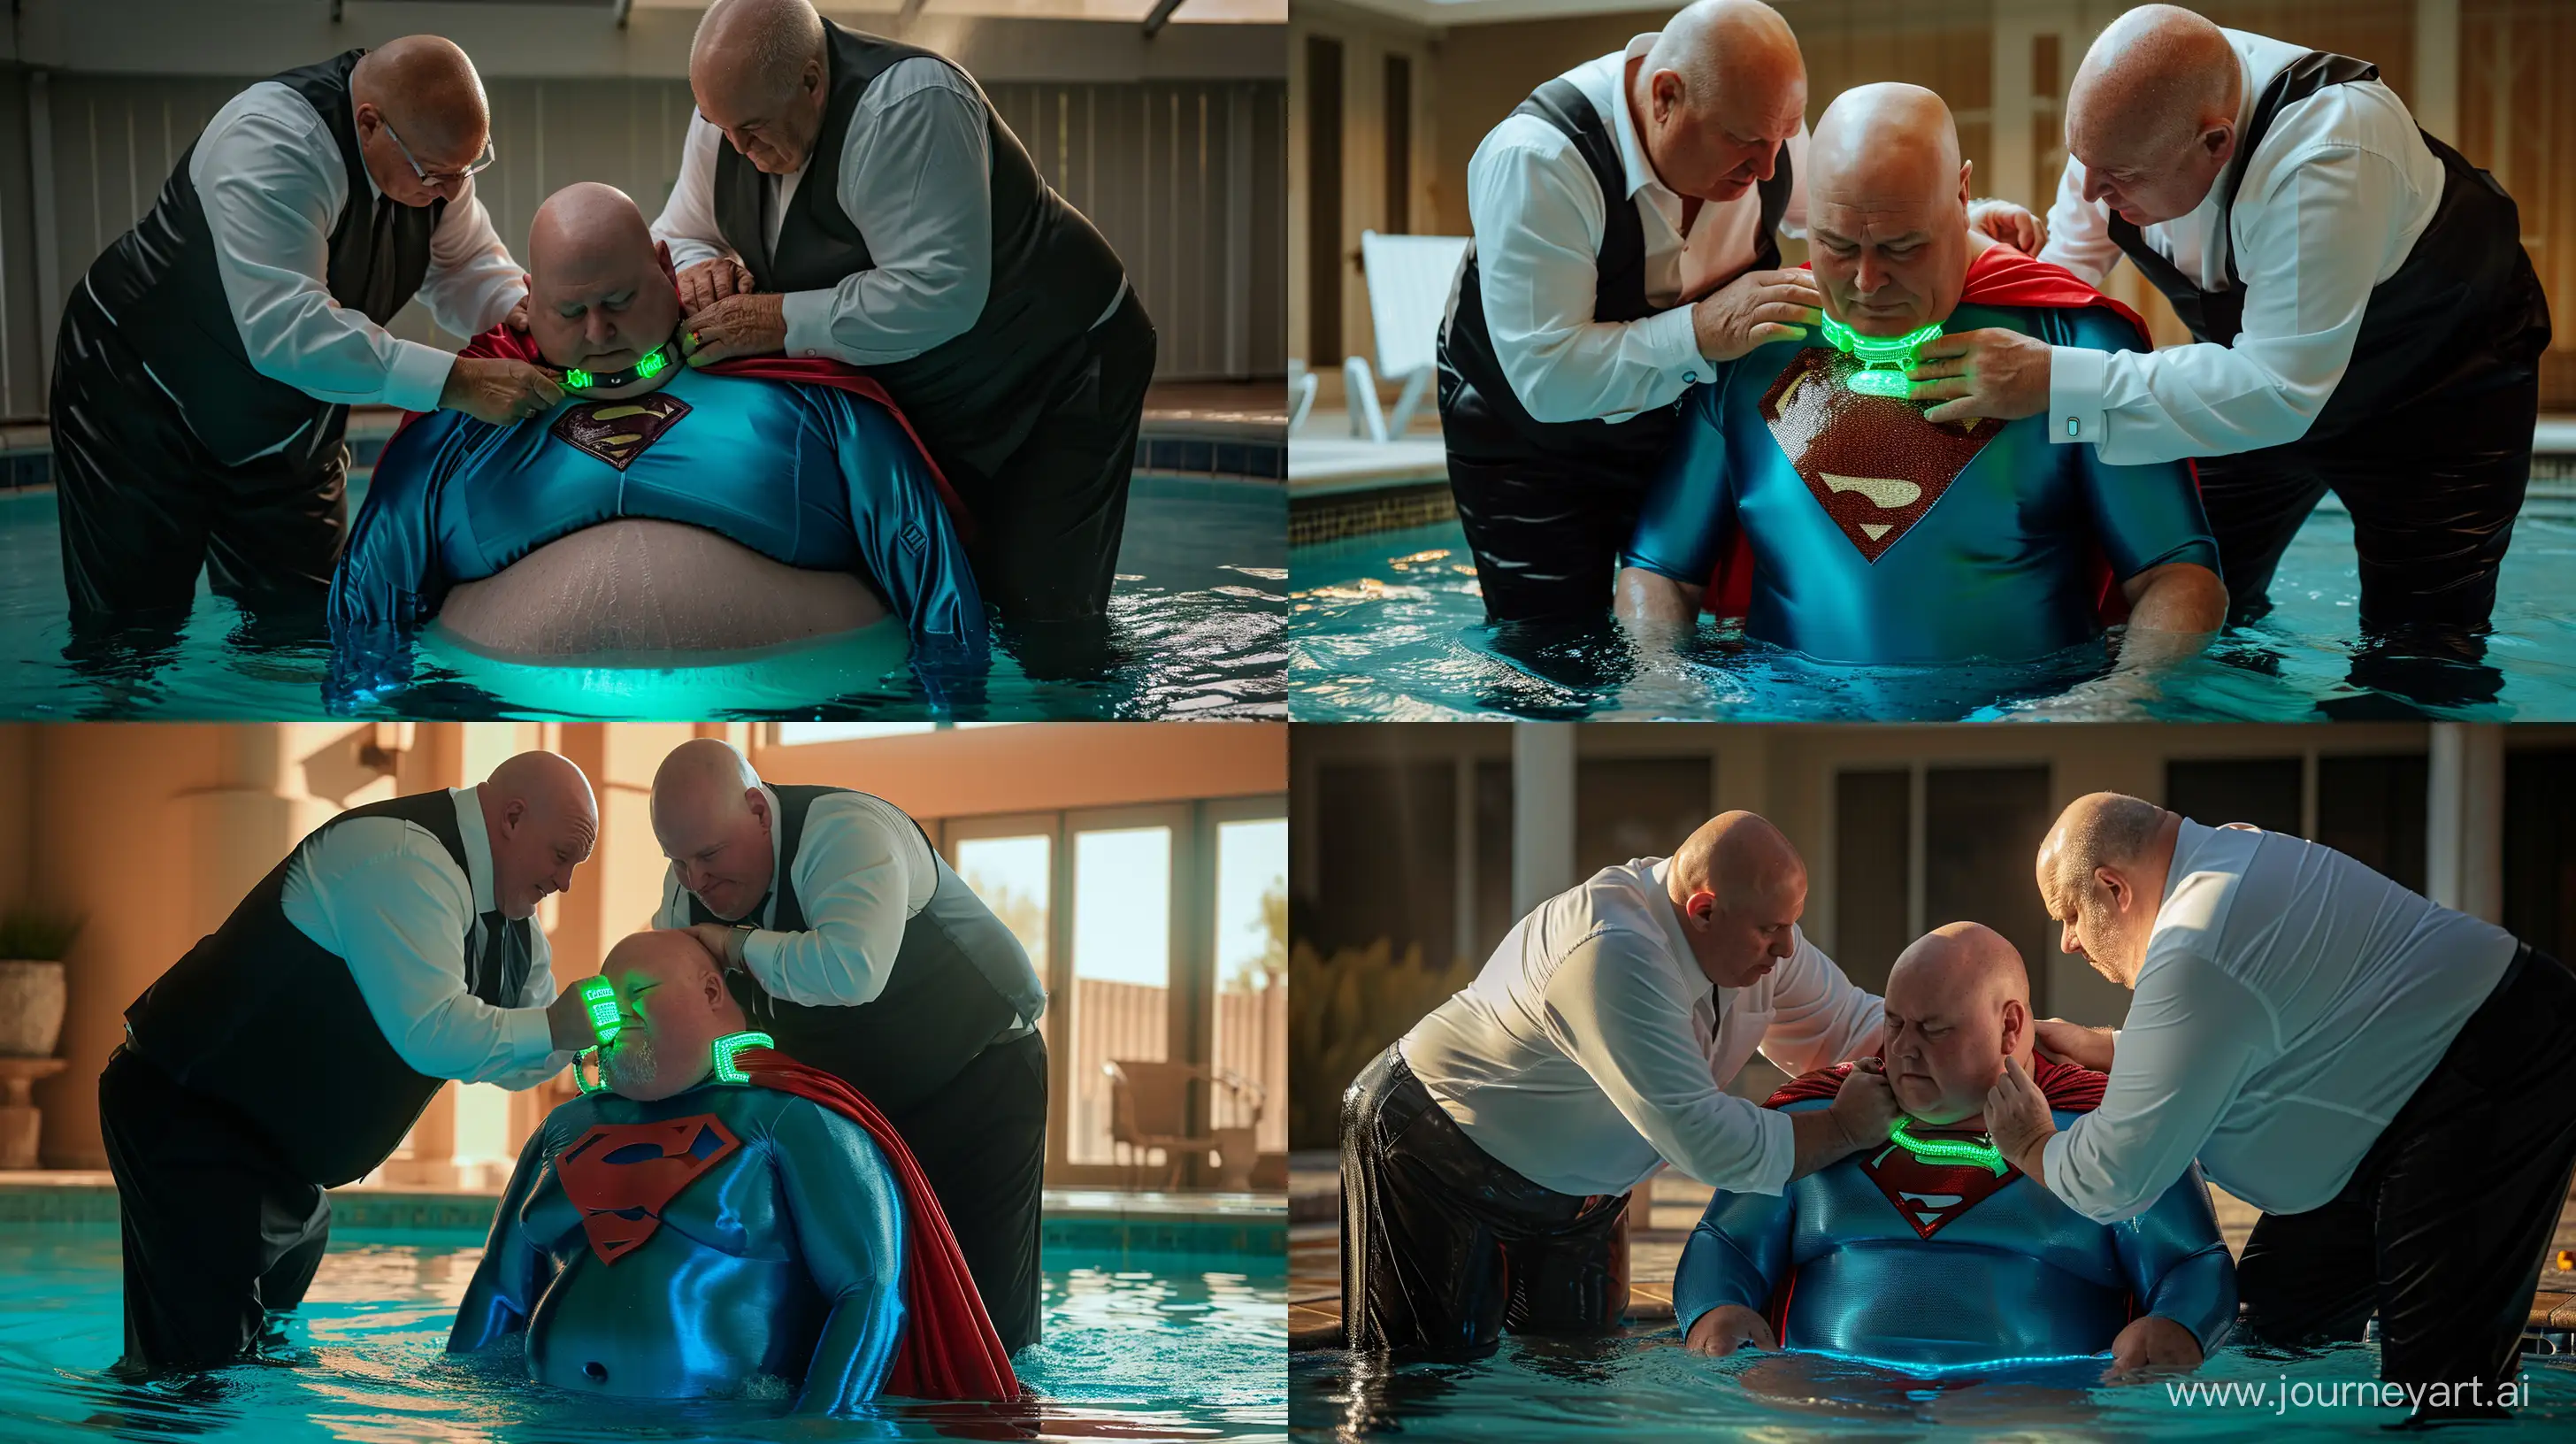 Elderly-Men-Securing-Green-Glowing-Dog-Collar-on-SupermanClad-Man-in-Pool